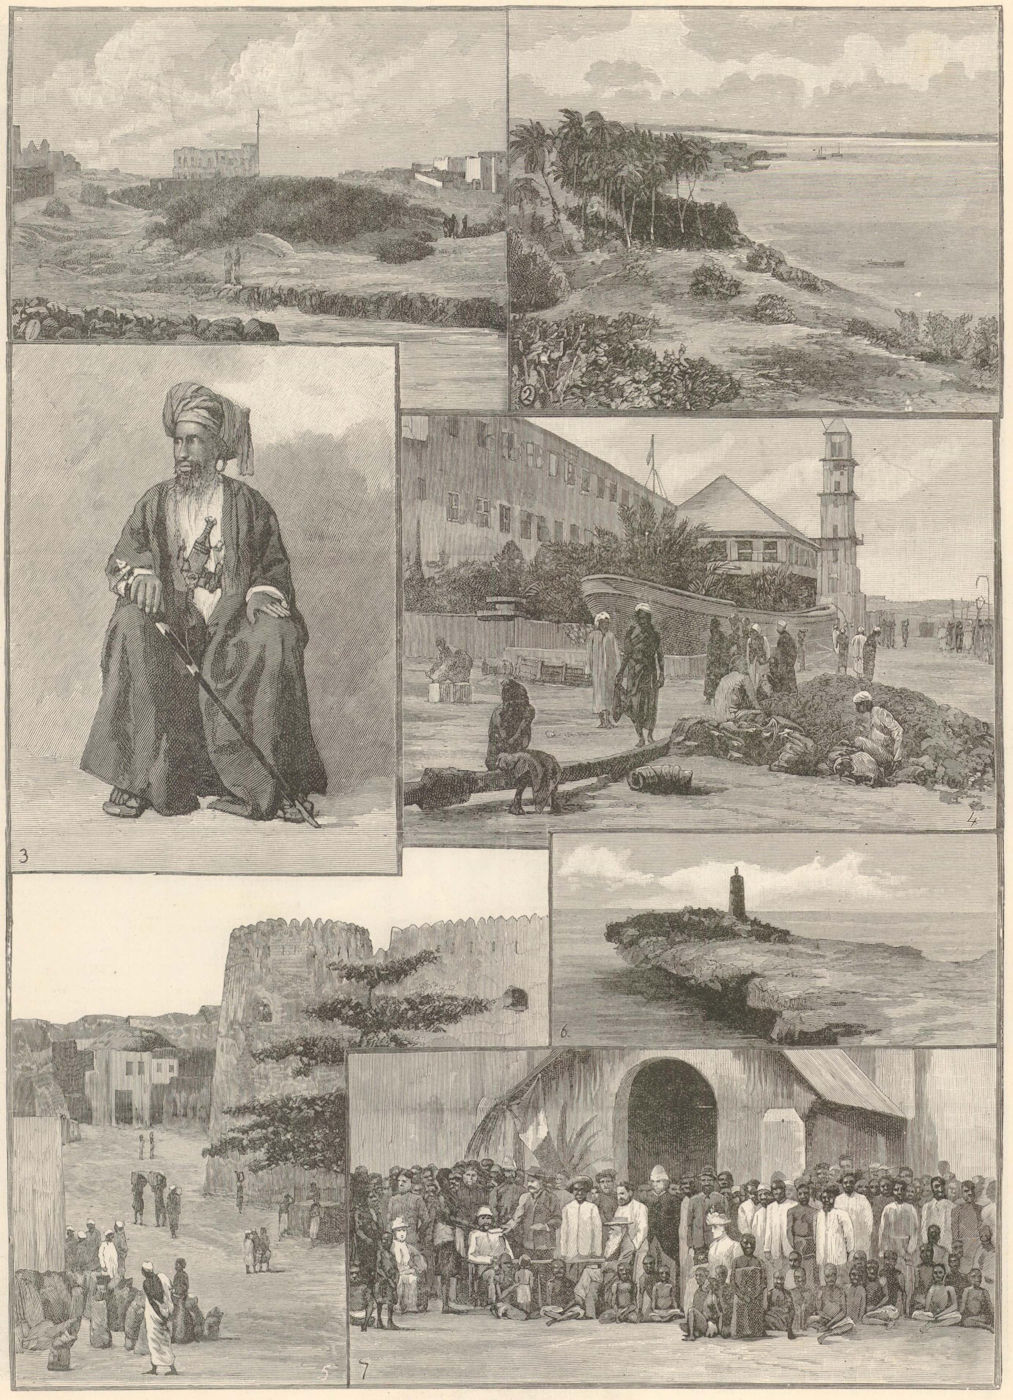 British East Africa Company. Kismayo Lamu Gazi Wanga Zanzibar Rabai. Kenya 1889